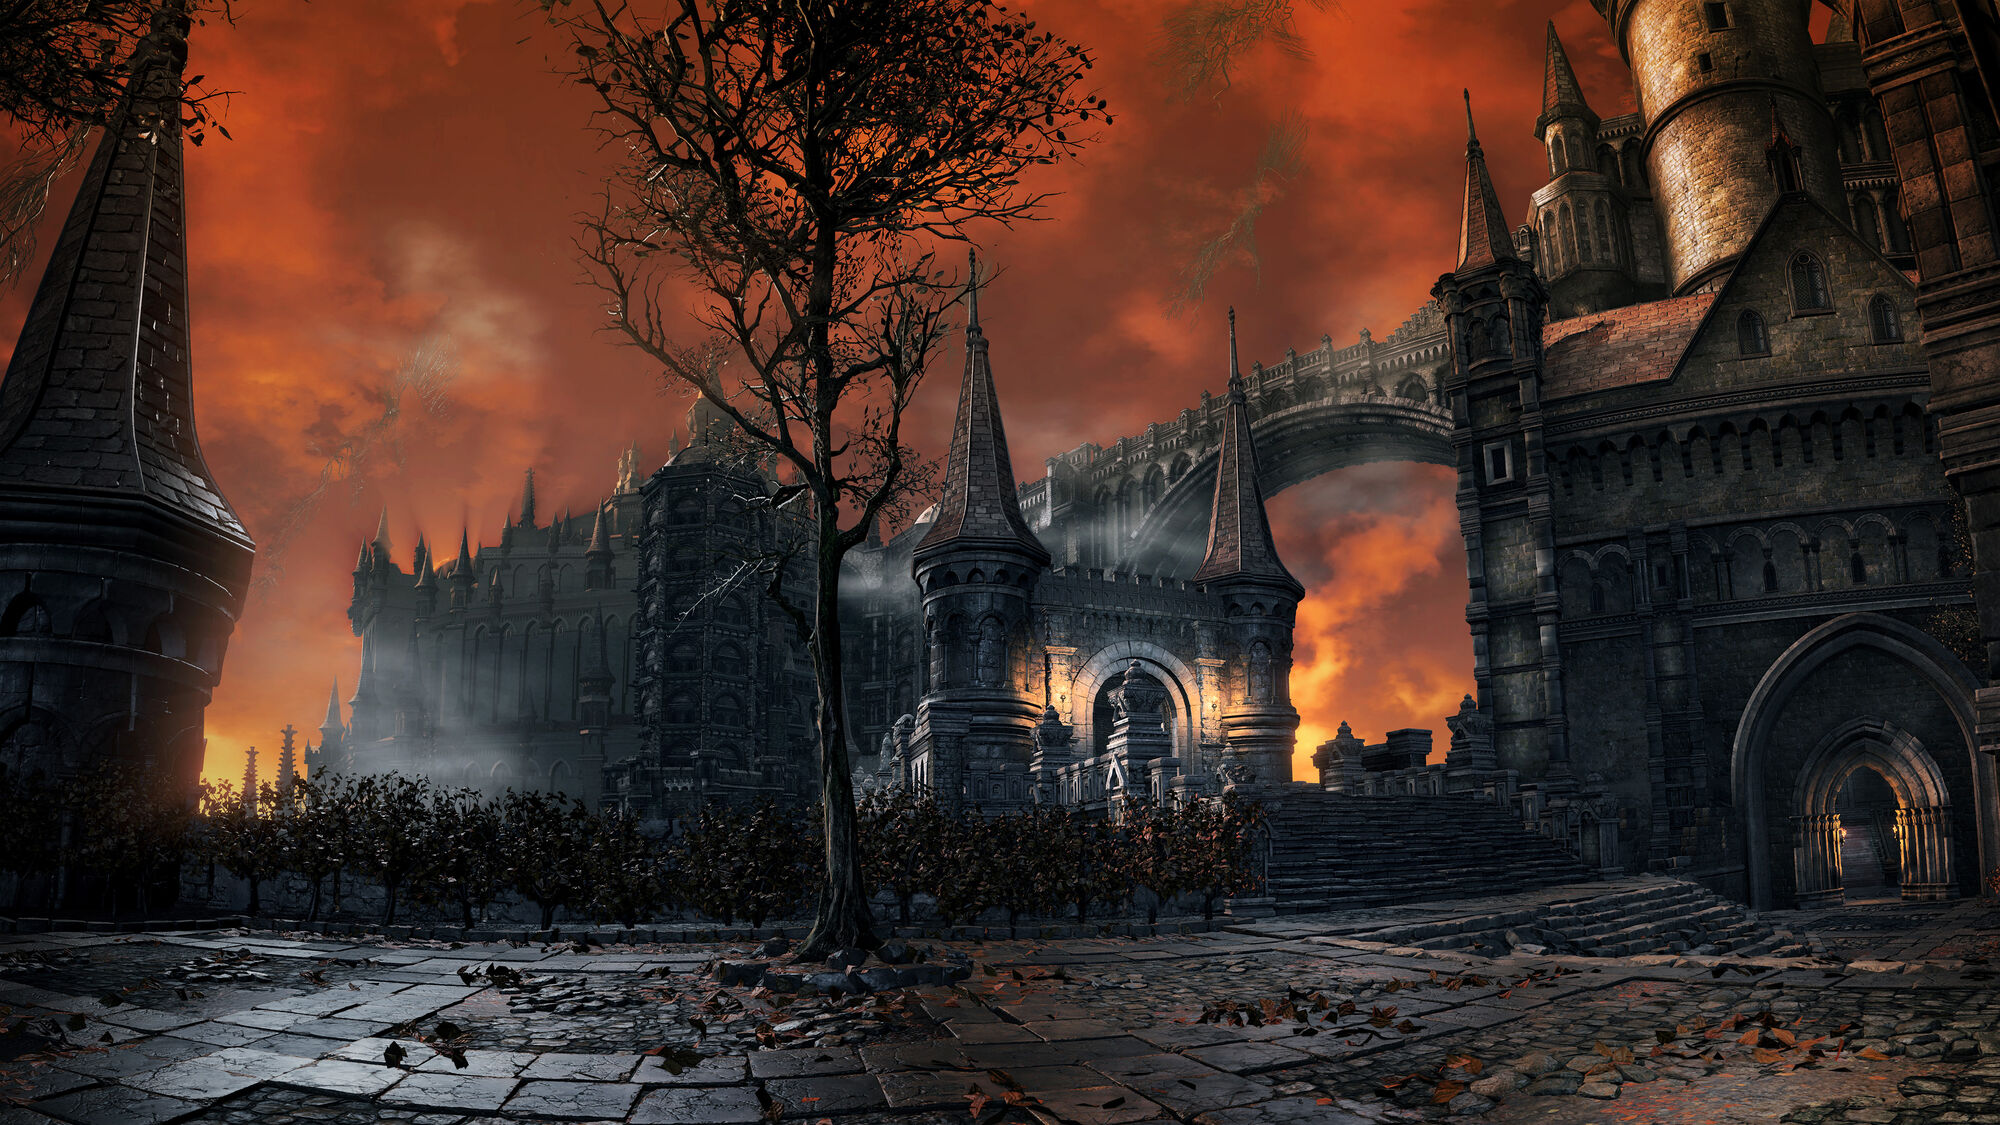 Dark Souls 3 Greirat Lothric Castle Location